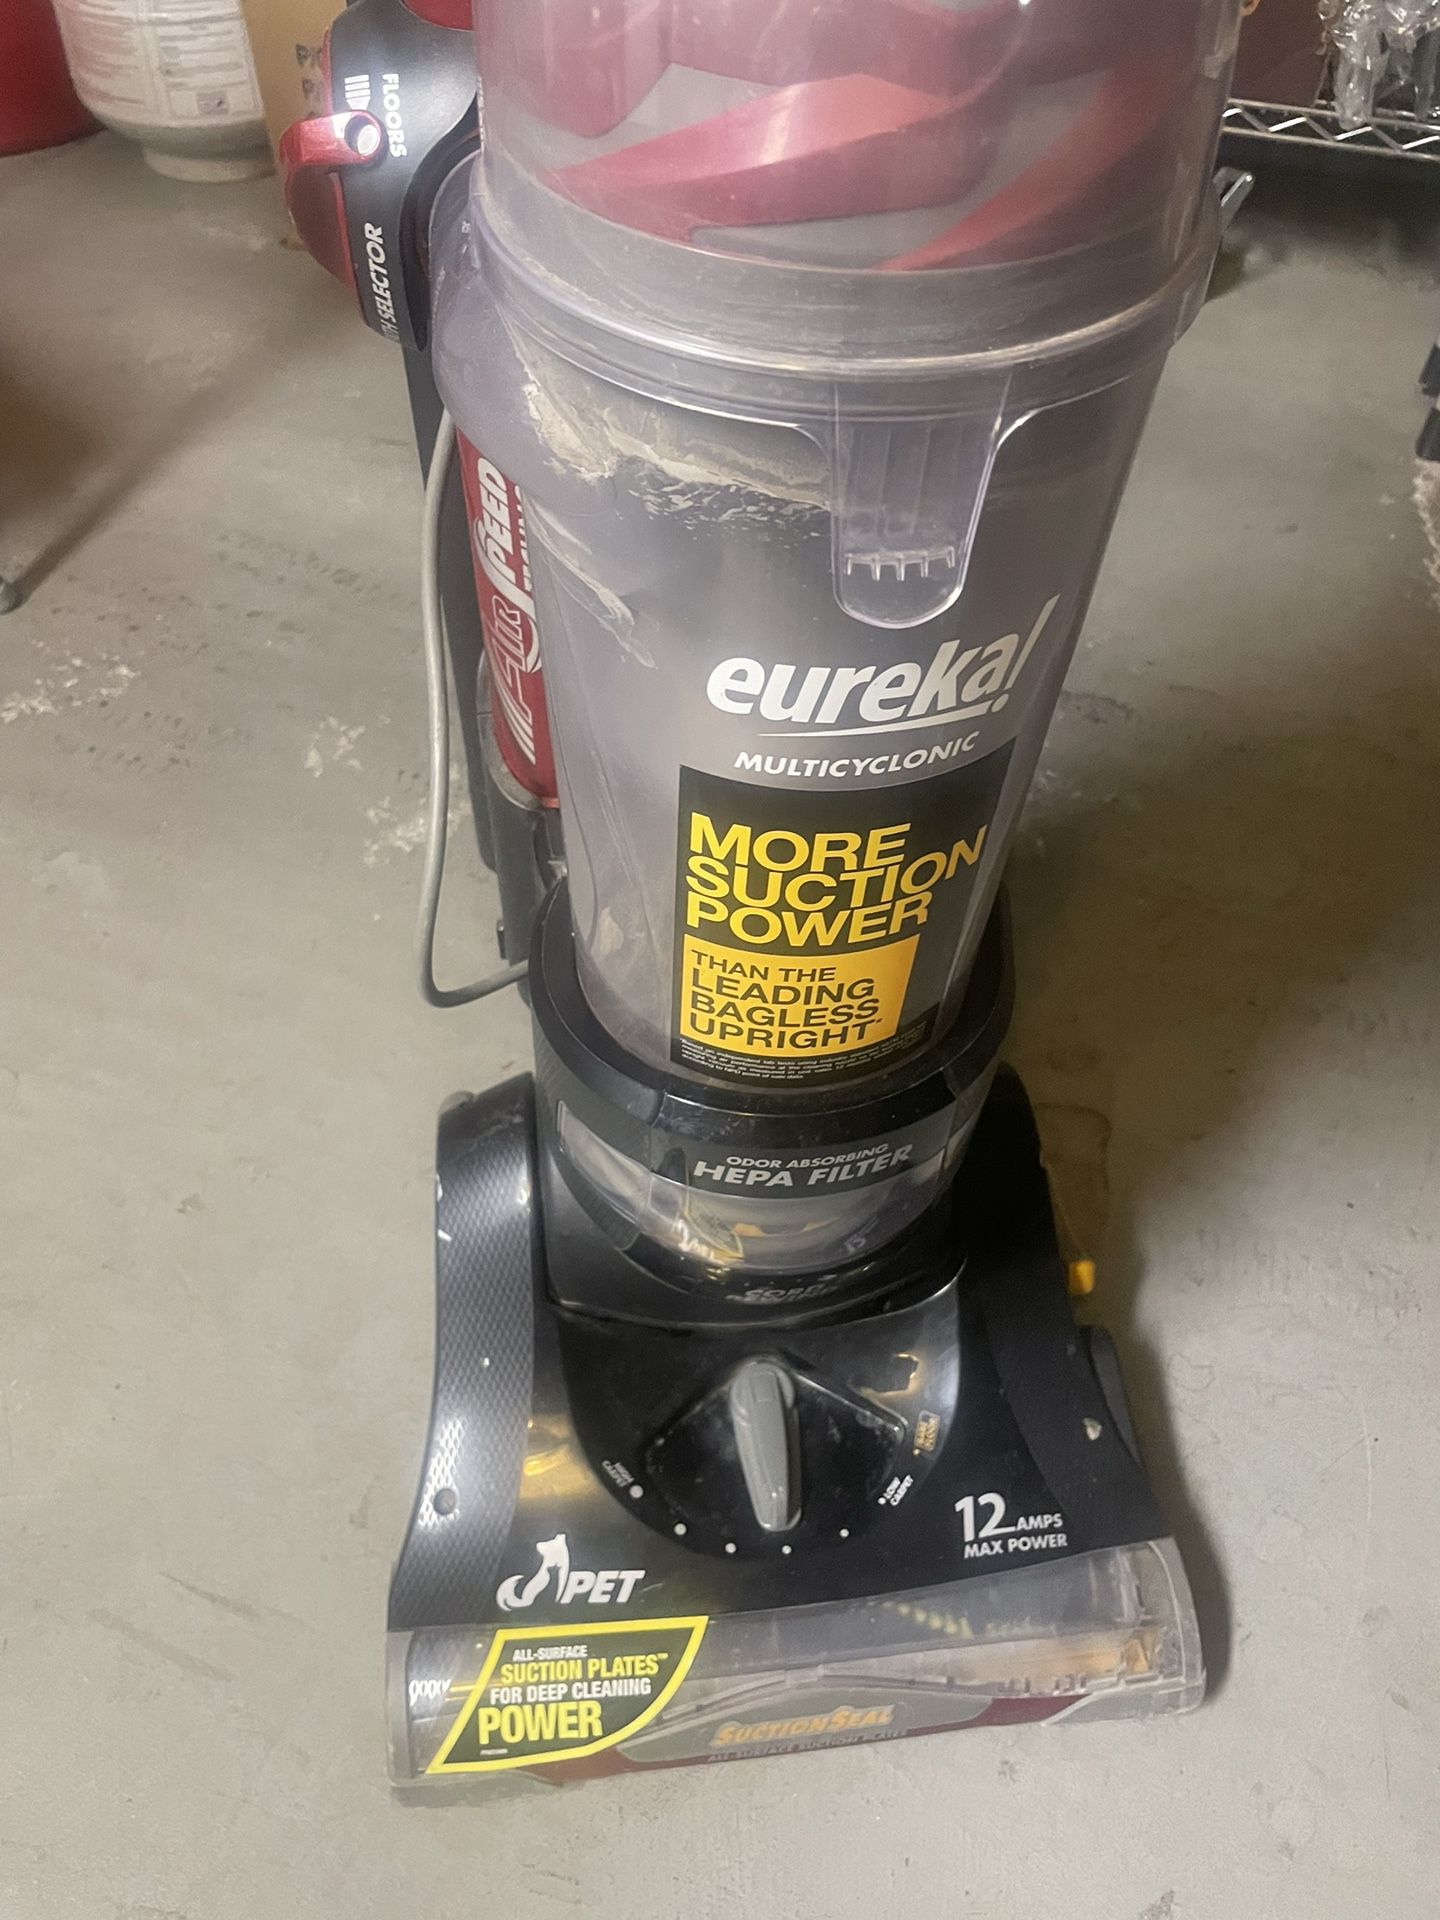 Eureka Multicyclonic Vacuum 